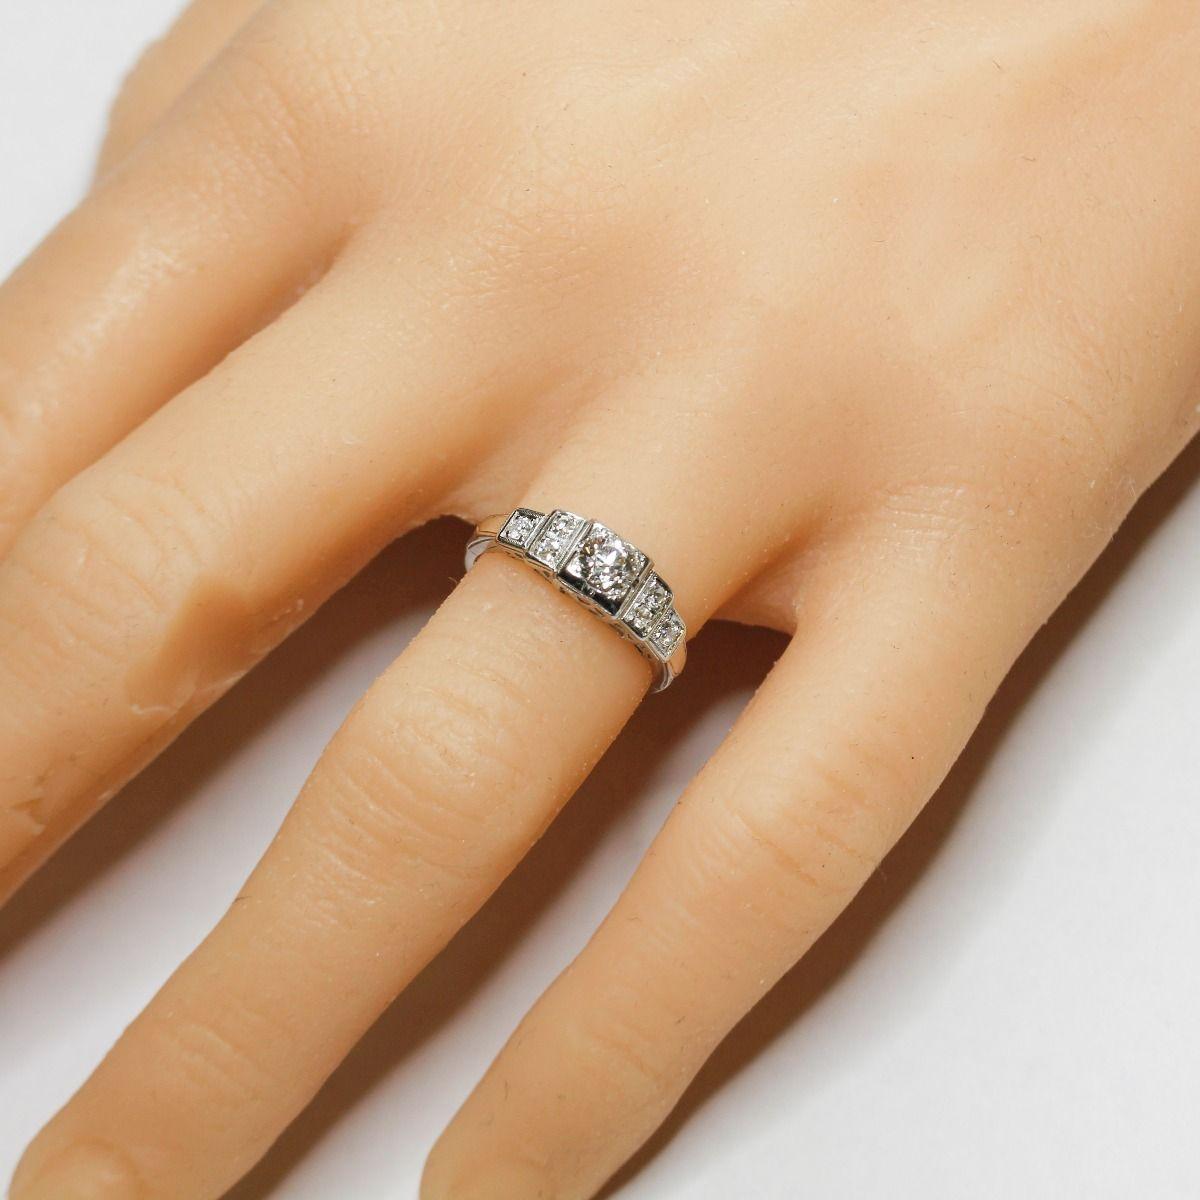 Art Deco Old European Cut Diamond Engagement Ring, Stunning Stepped Design 4